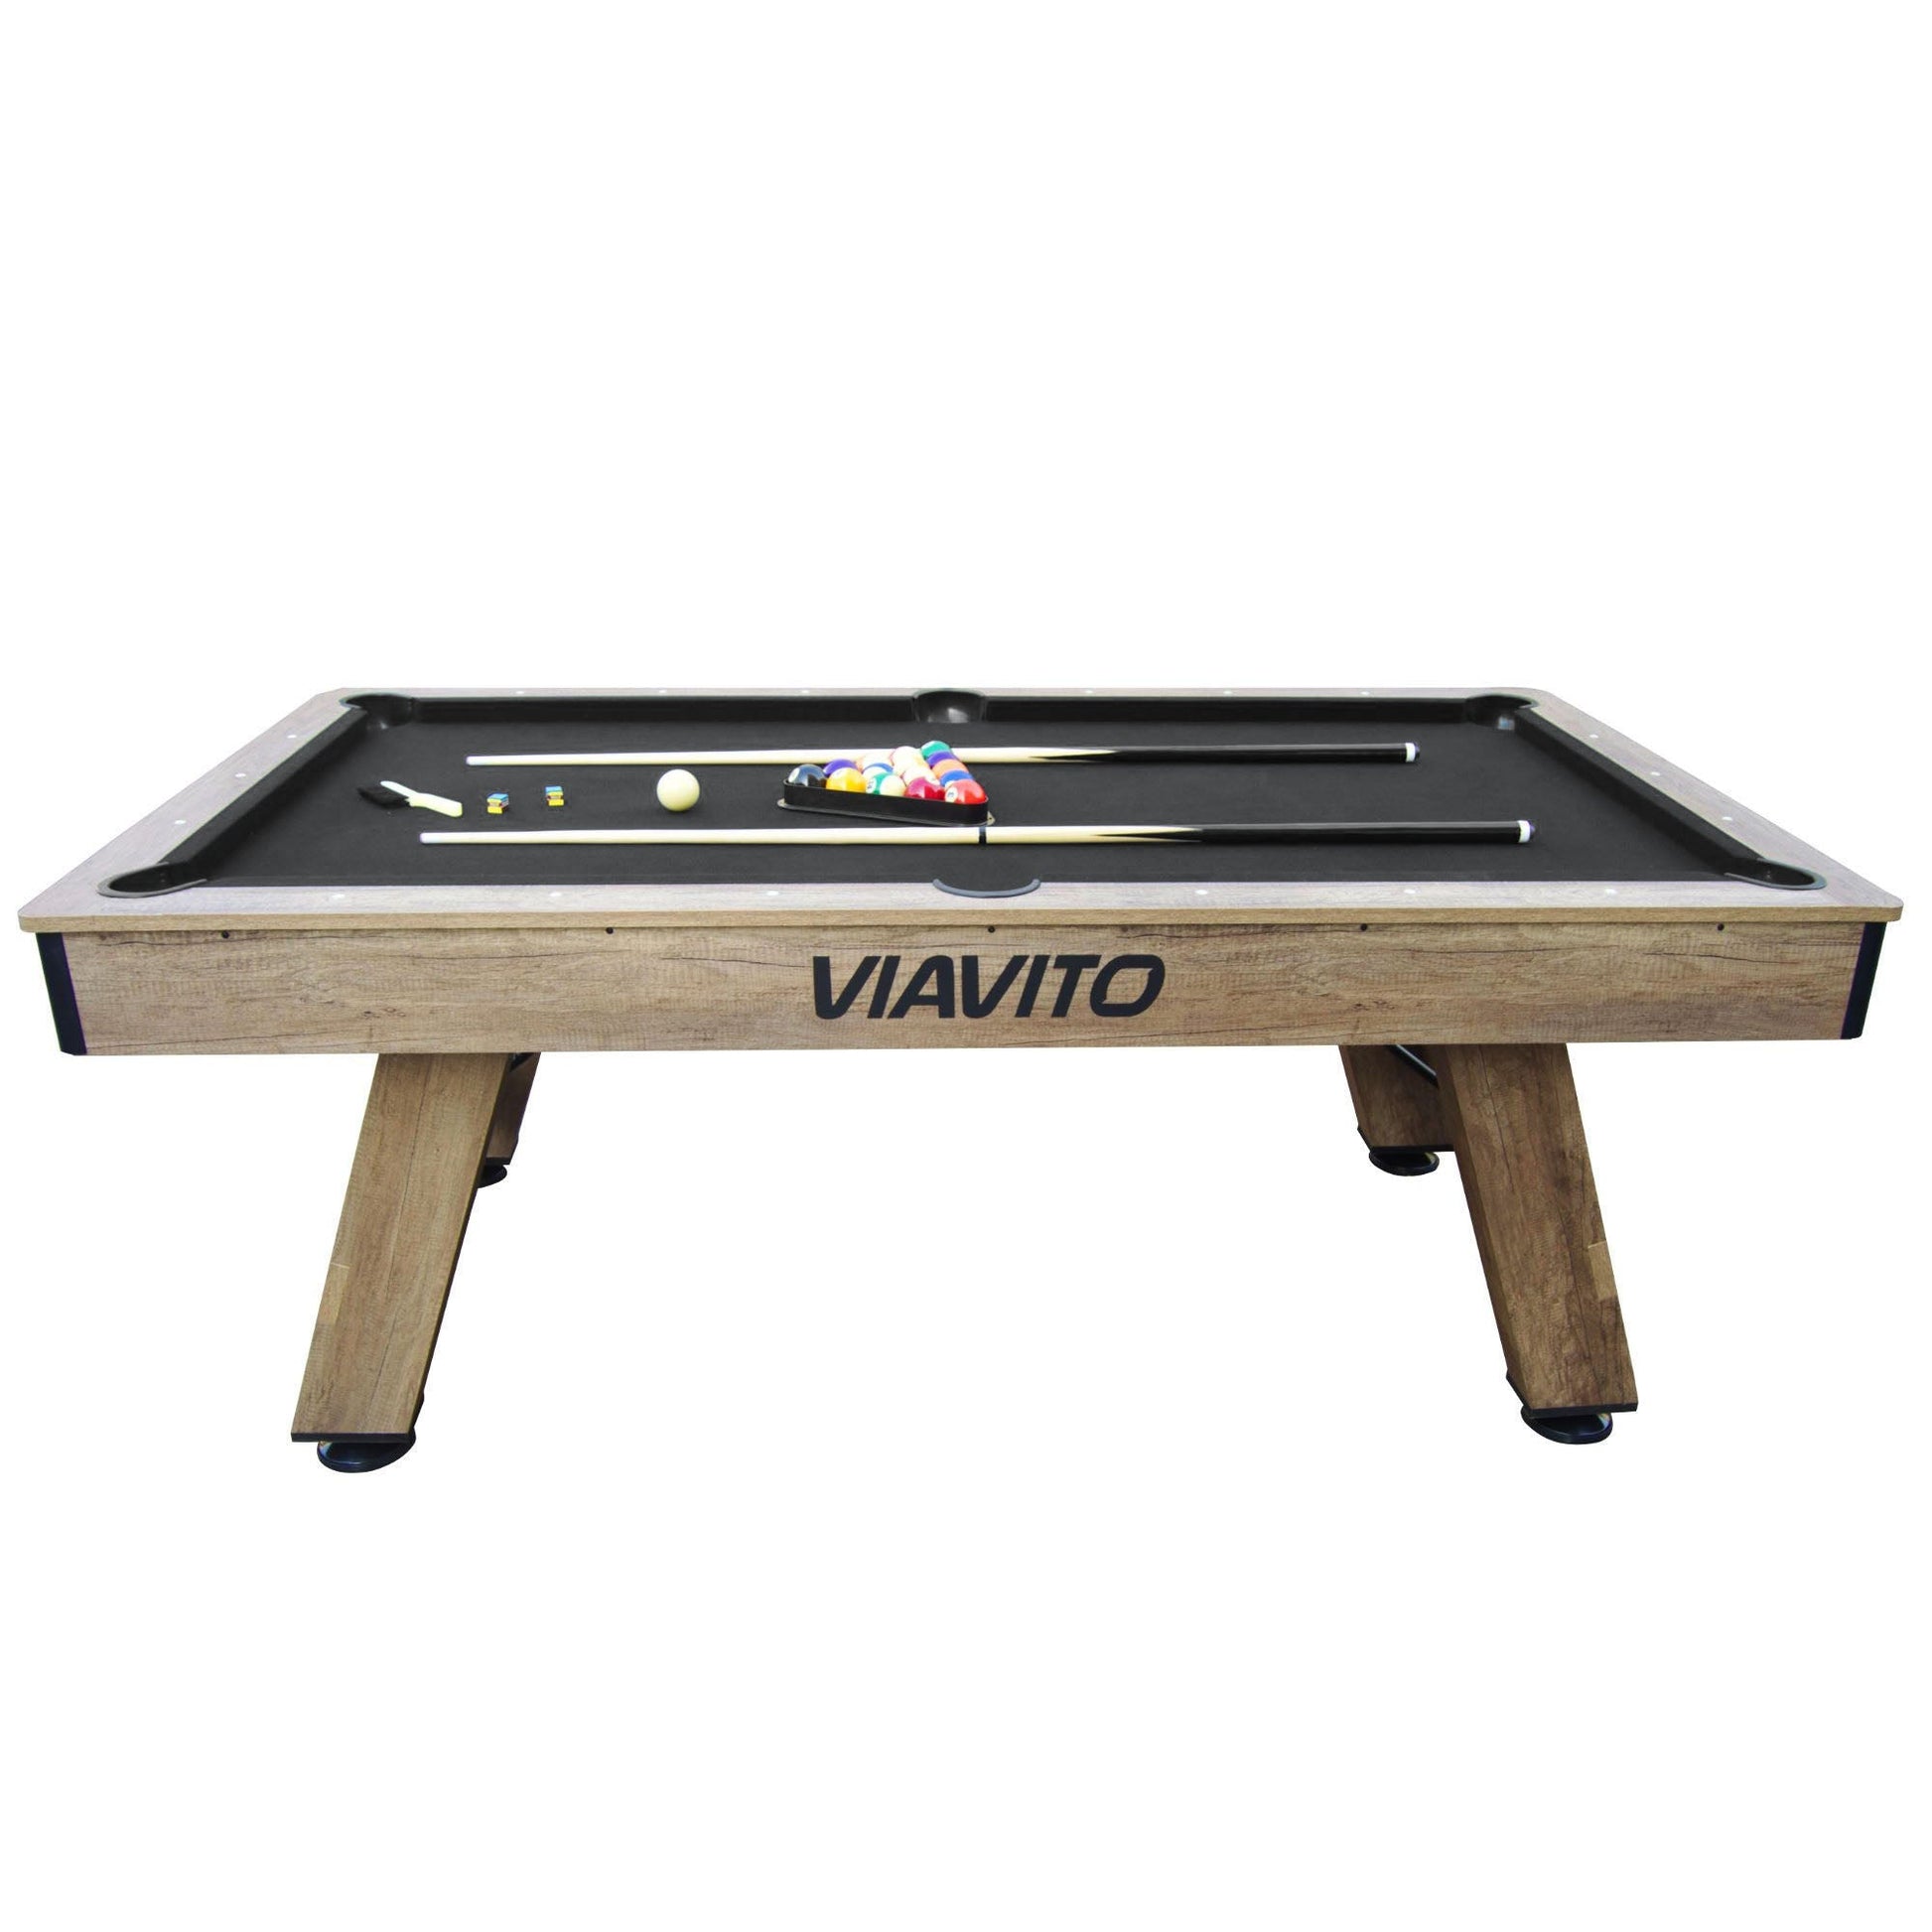 |Viavito PT500 7ft Pool Table - Black - Side|